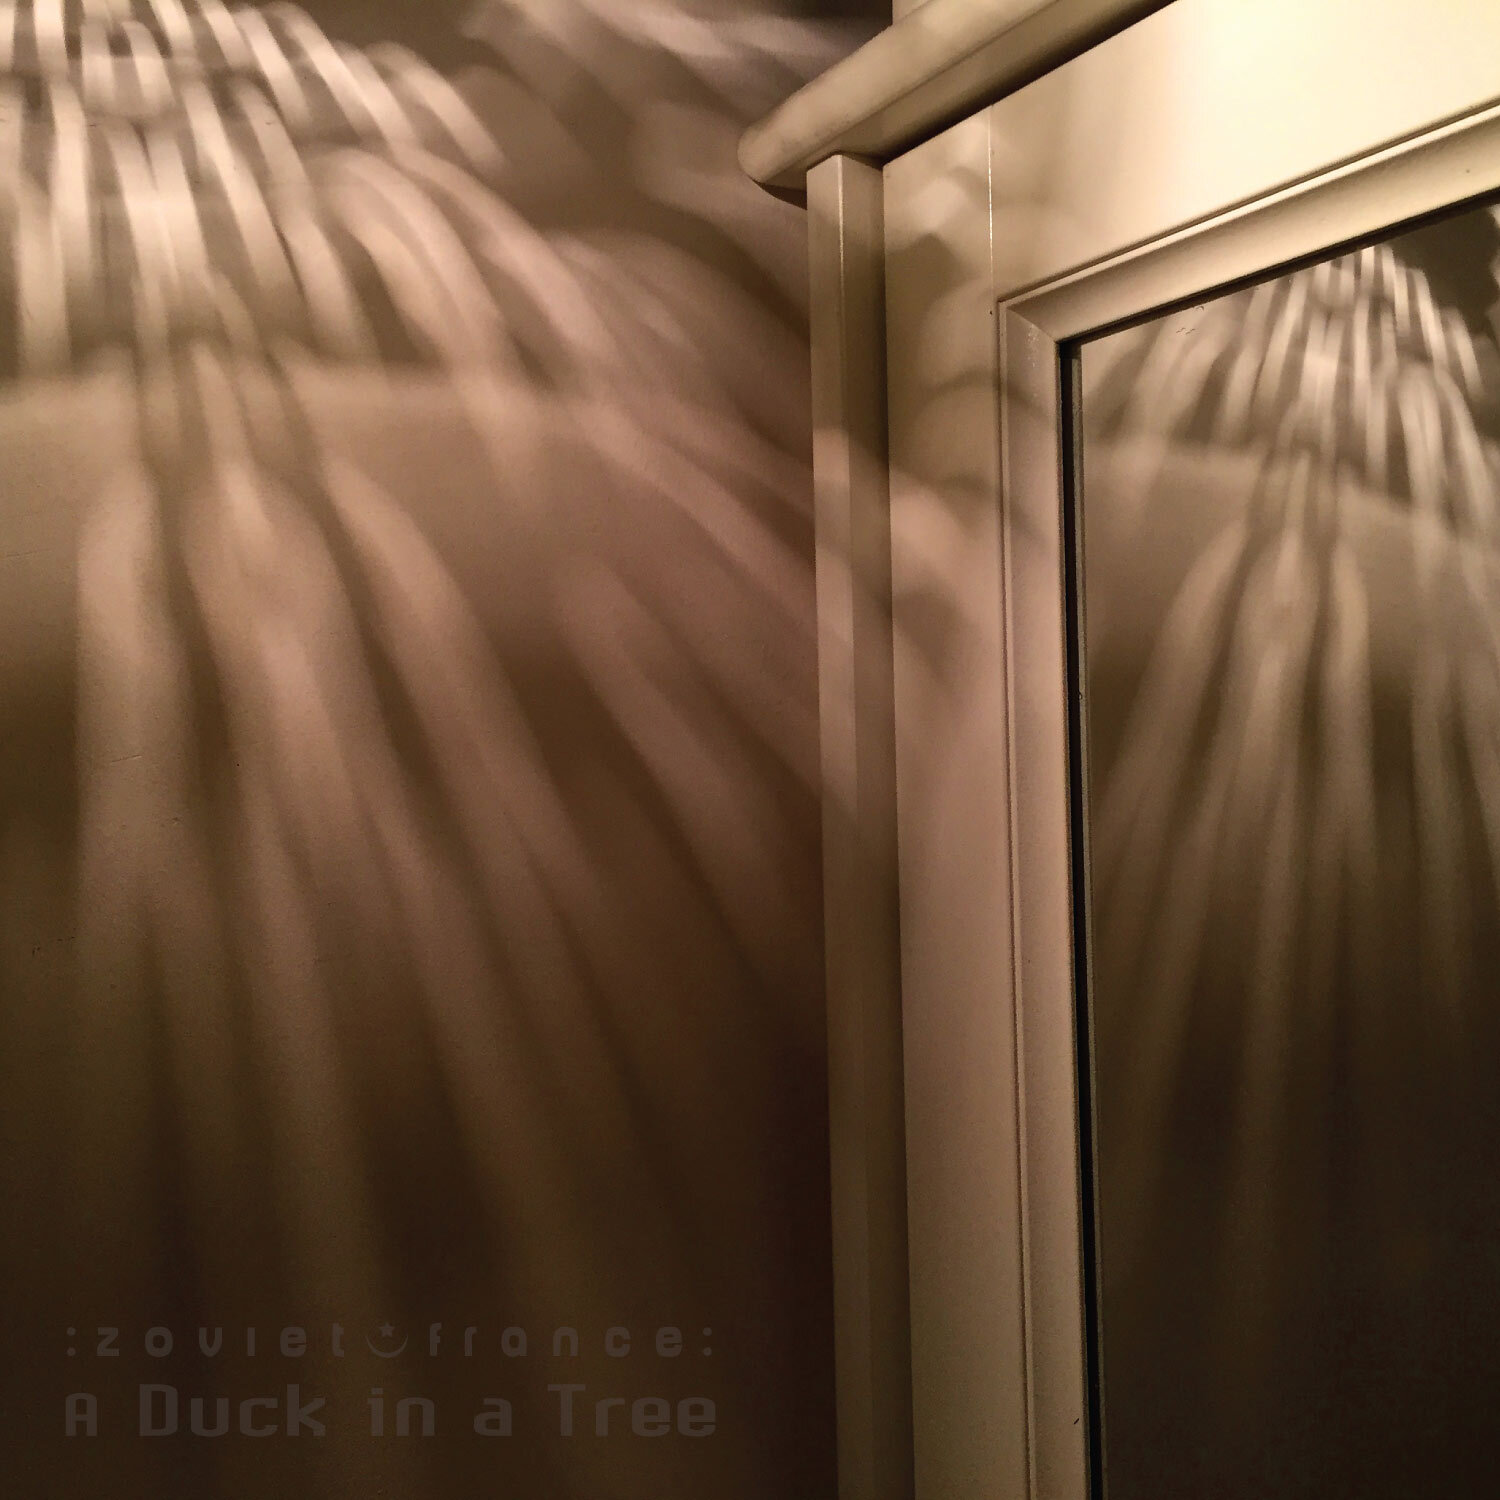 A-Duck-in-a-Tree-2019-03-02-_-Good-Night-Rain-cover-1500.jpg